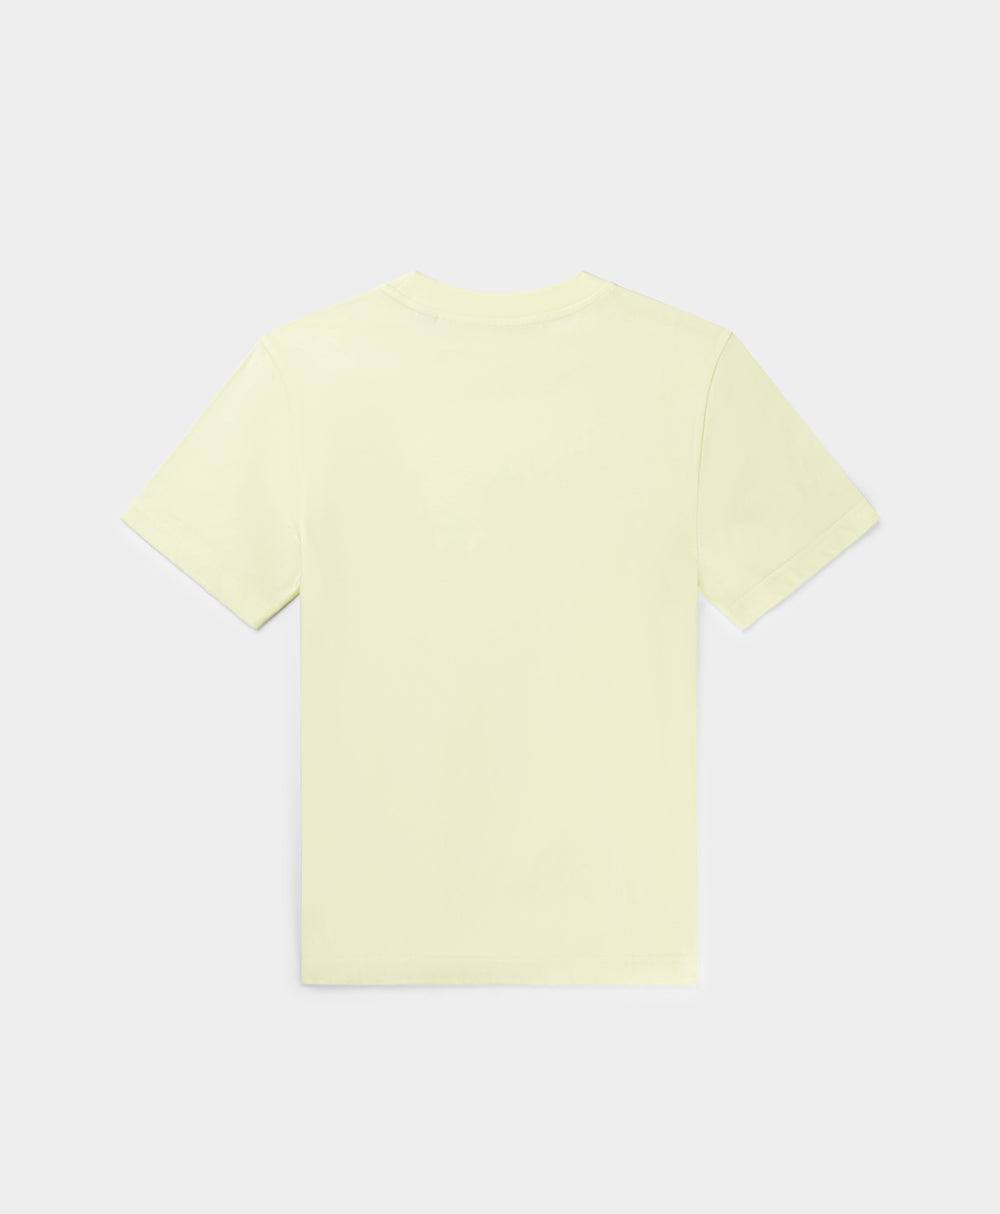 DP - Icing Yellow Circle  T-Shirt - Packshot - Rear